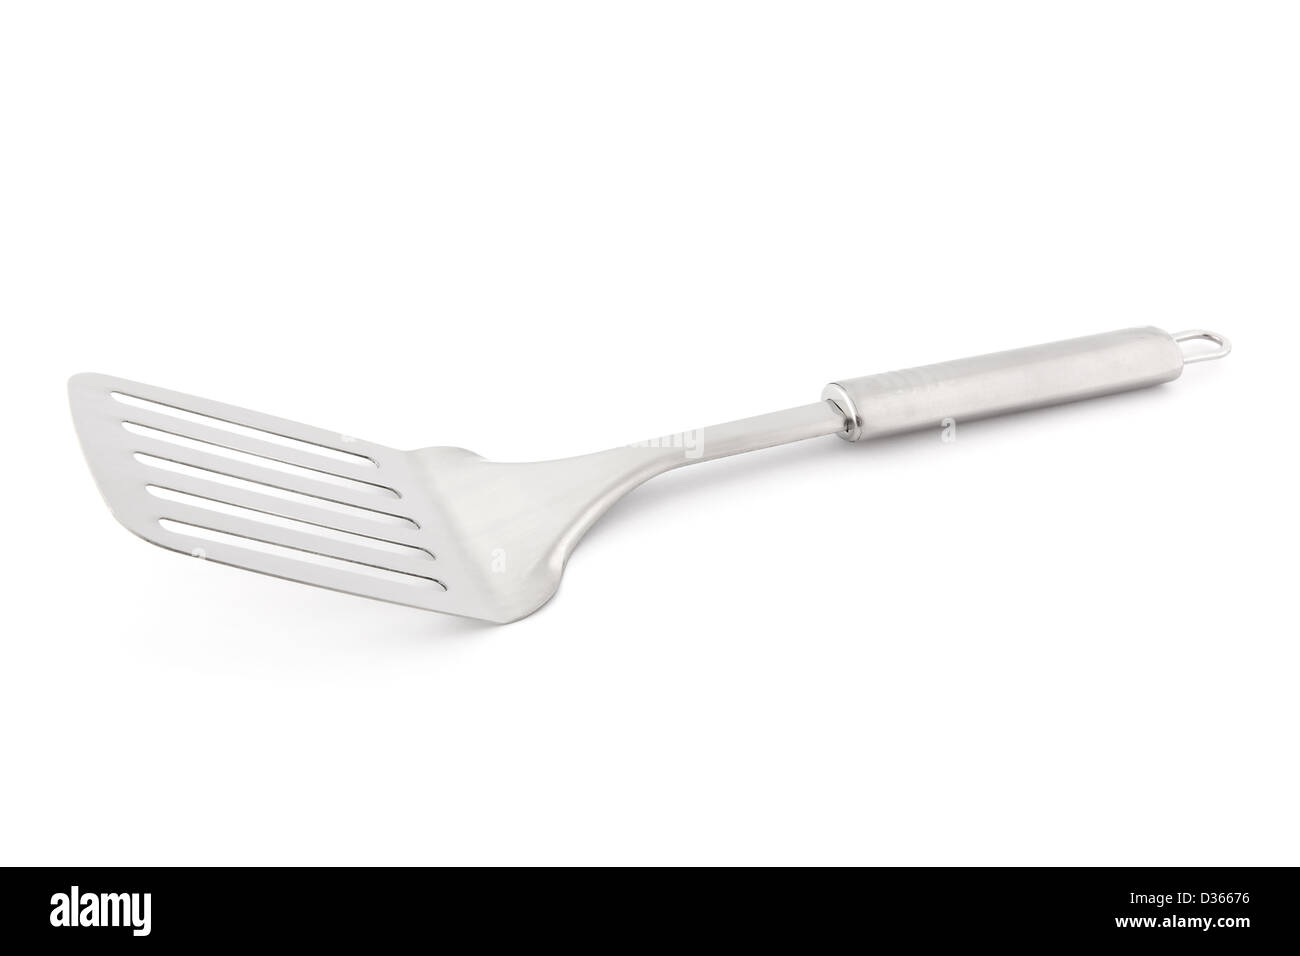 Single silver spatula on a white background Stock Photo